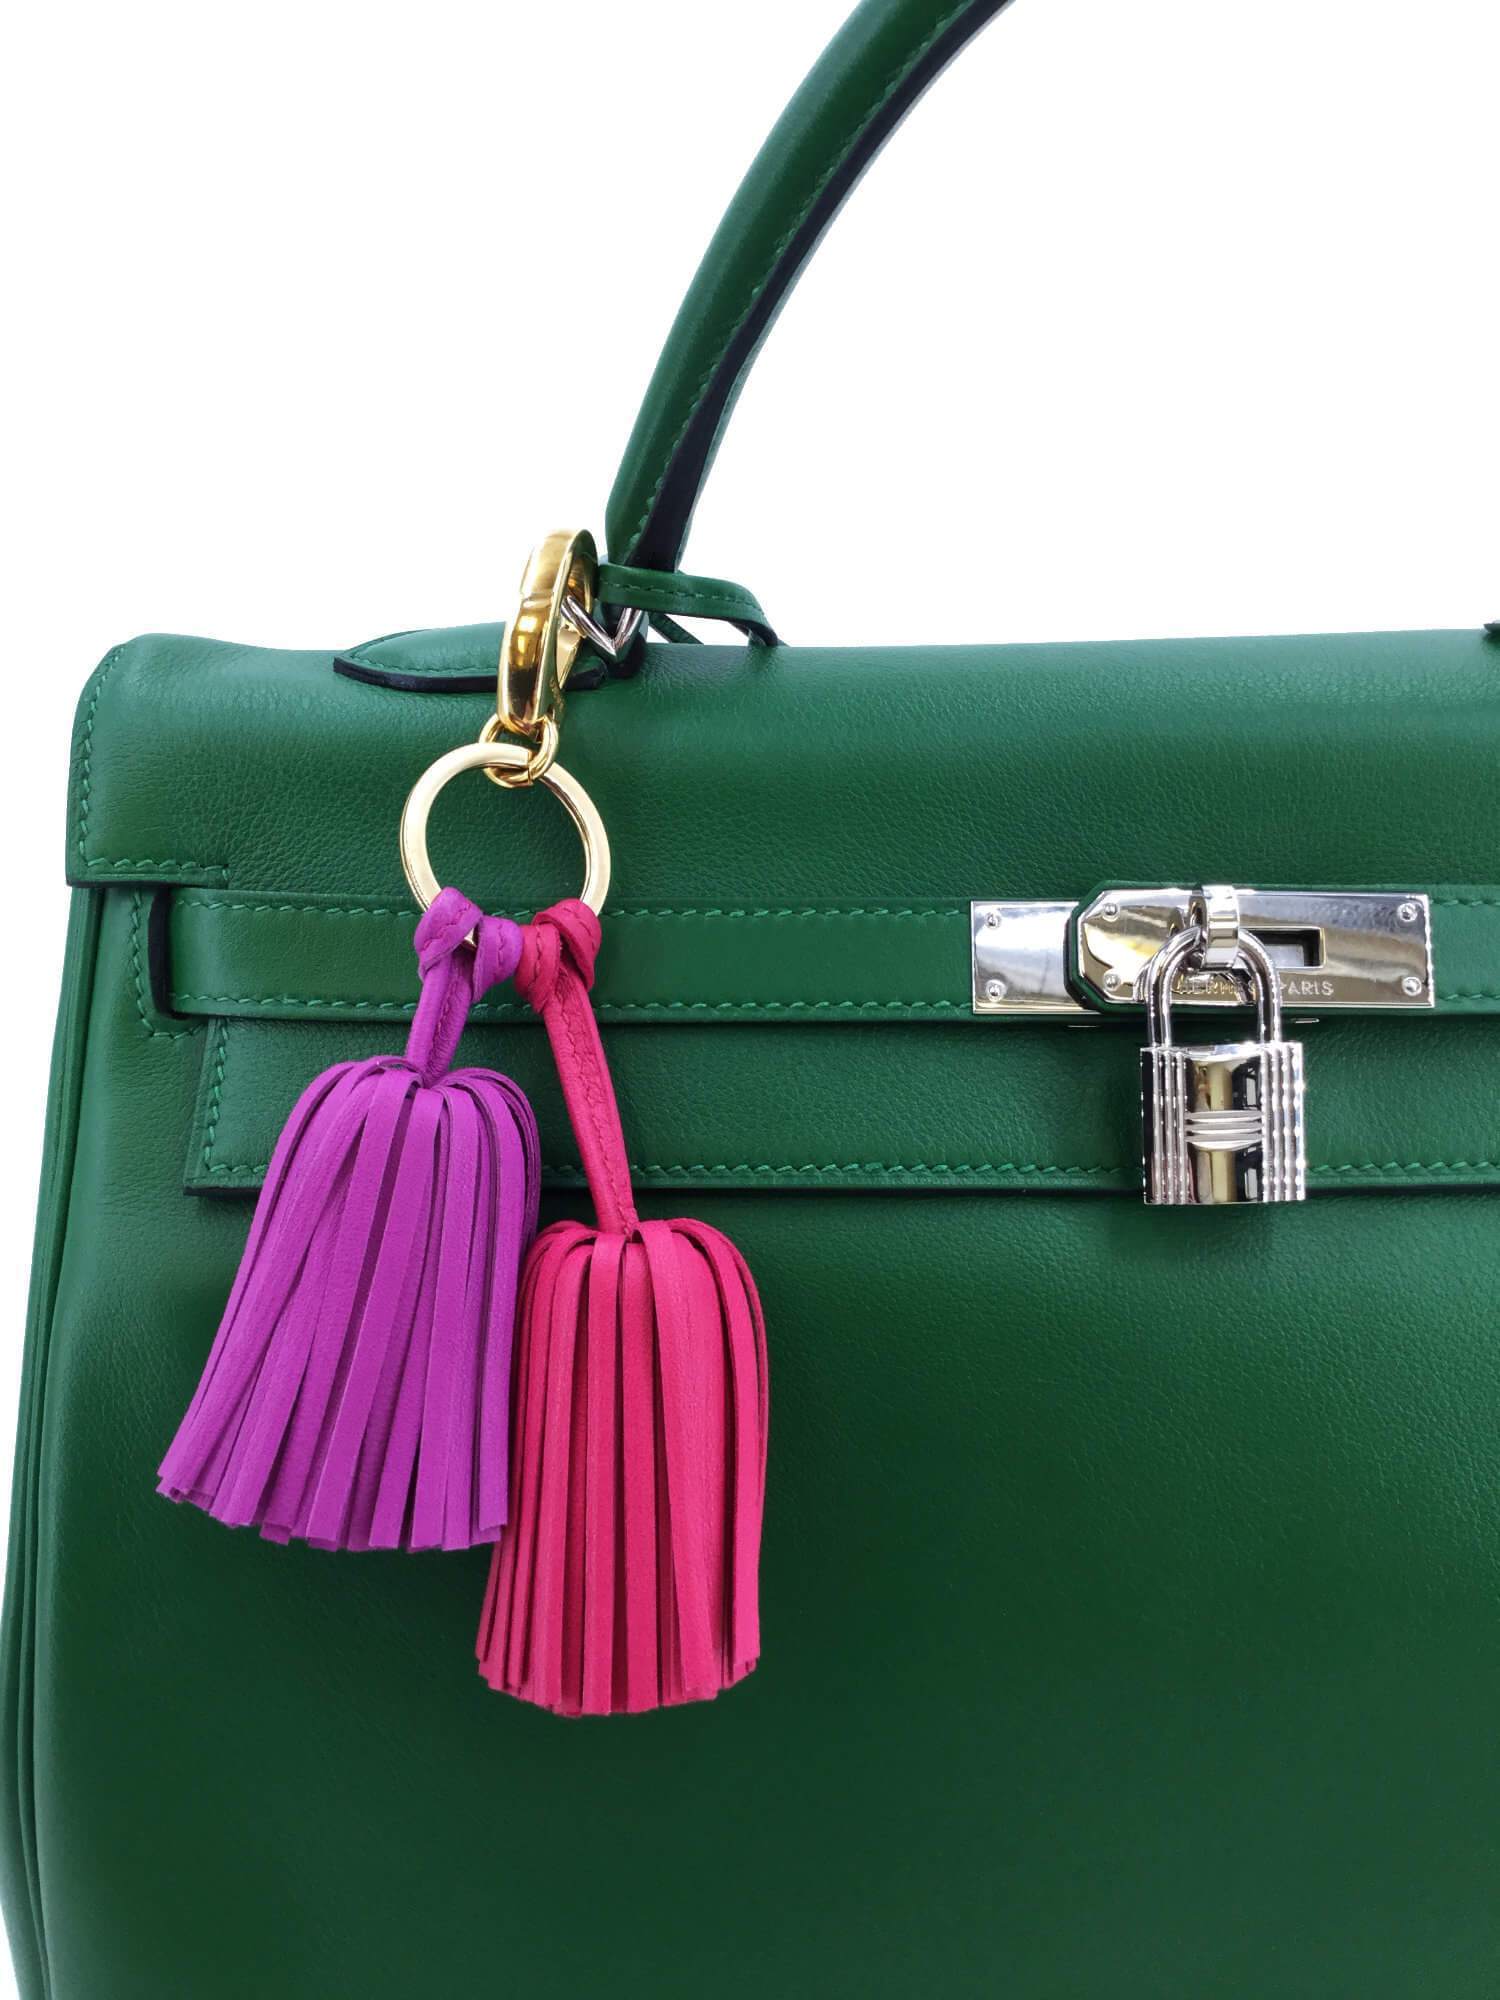 Loewe Sheepskin Leather Tassel Bag Charm Key Holder Pink Purple-designer resale